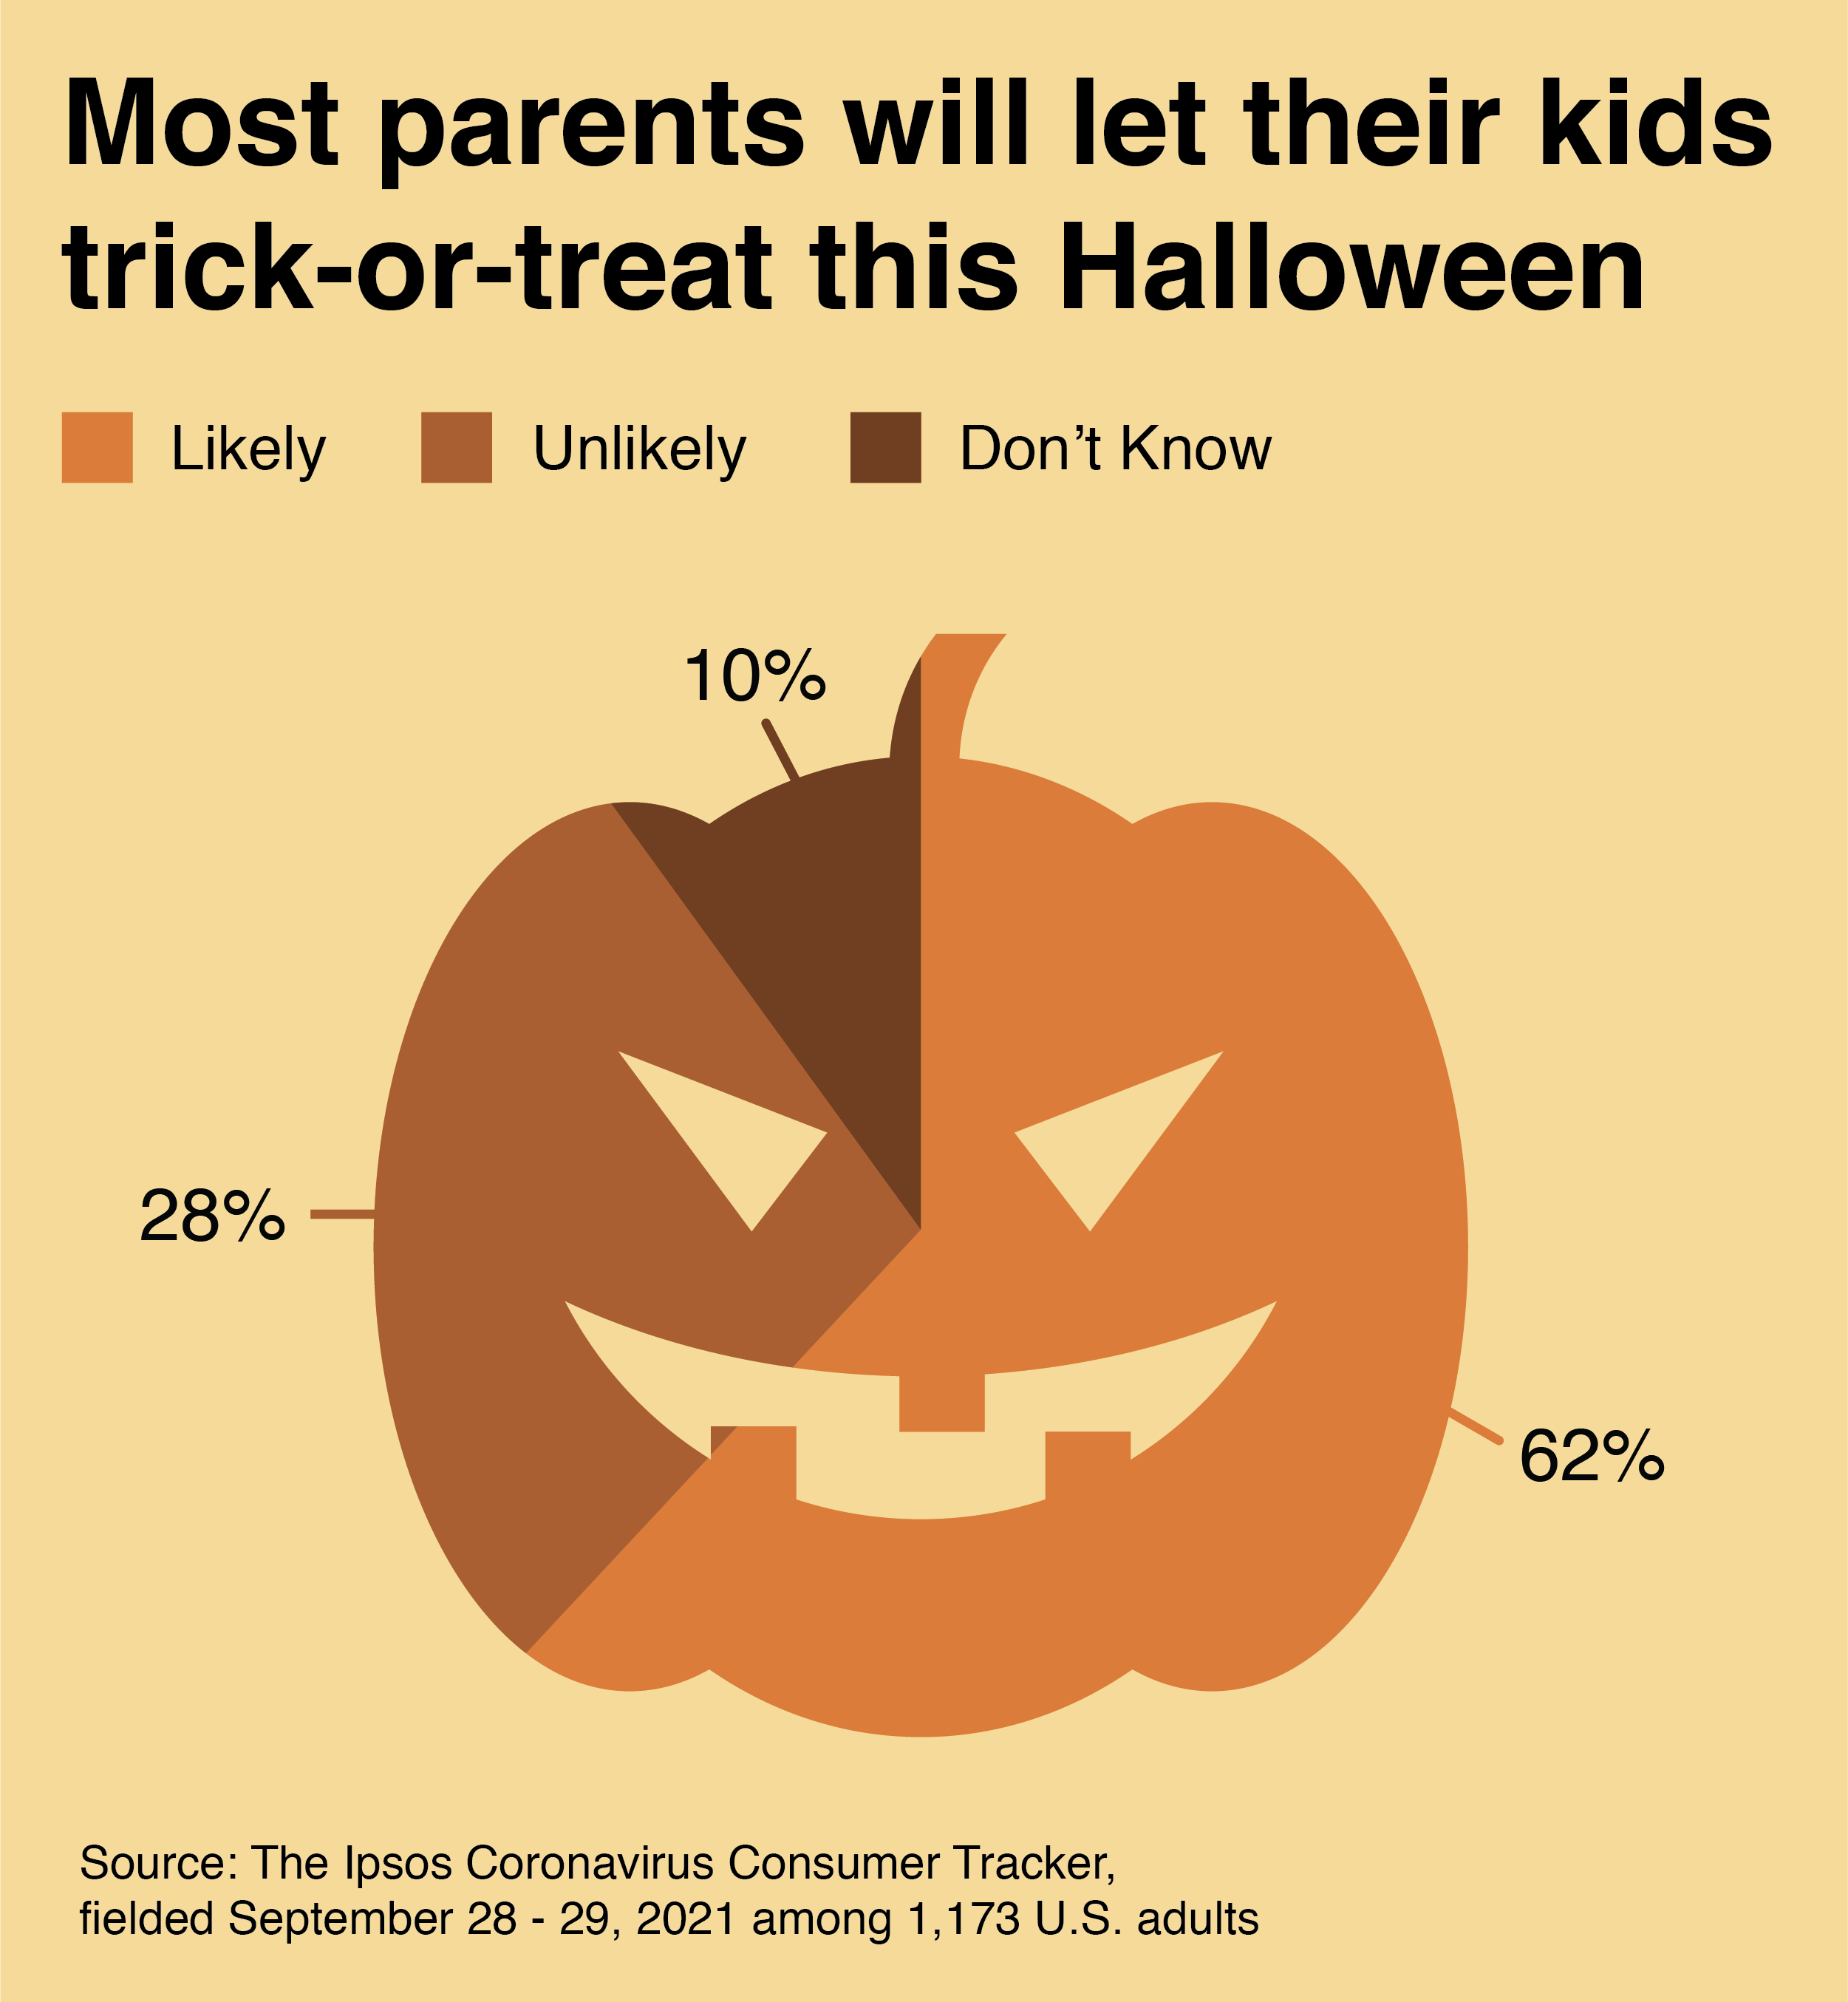 likelihood of allowing kids to trick-or-treat